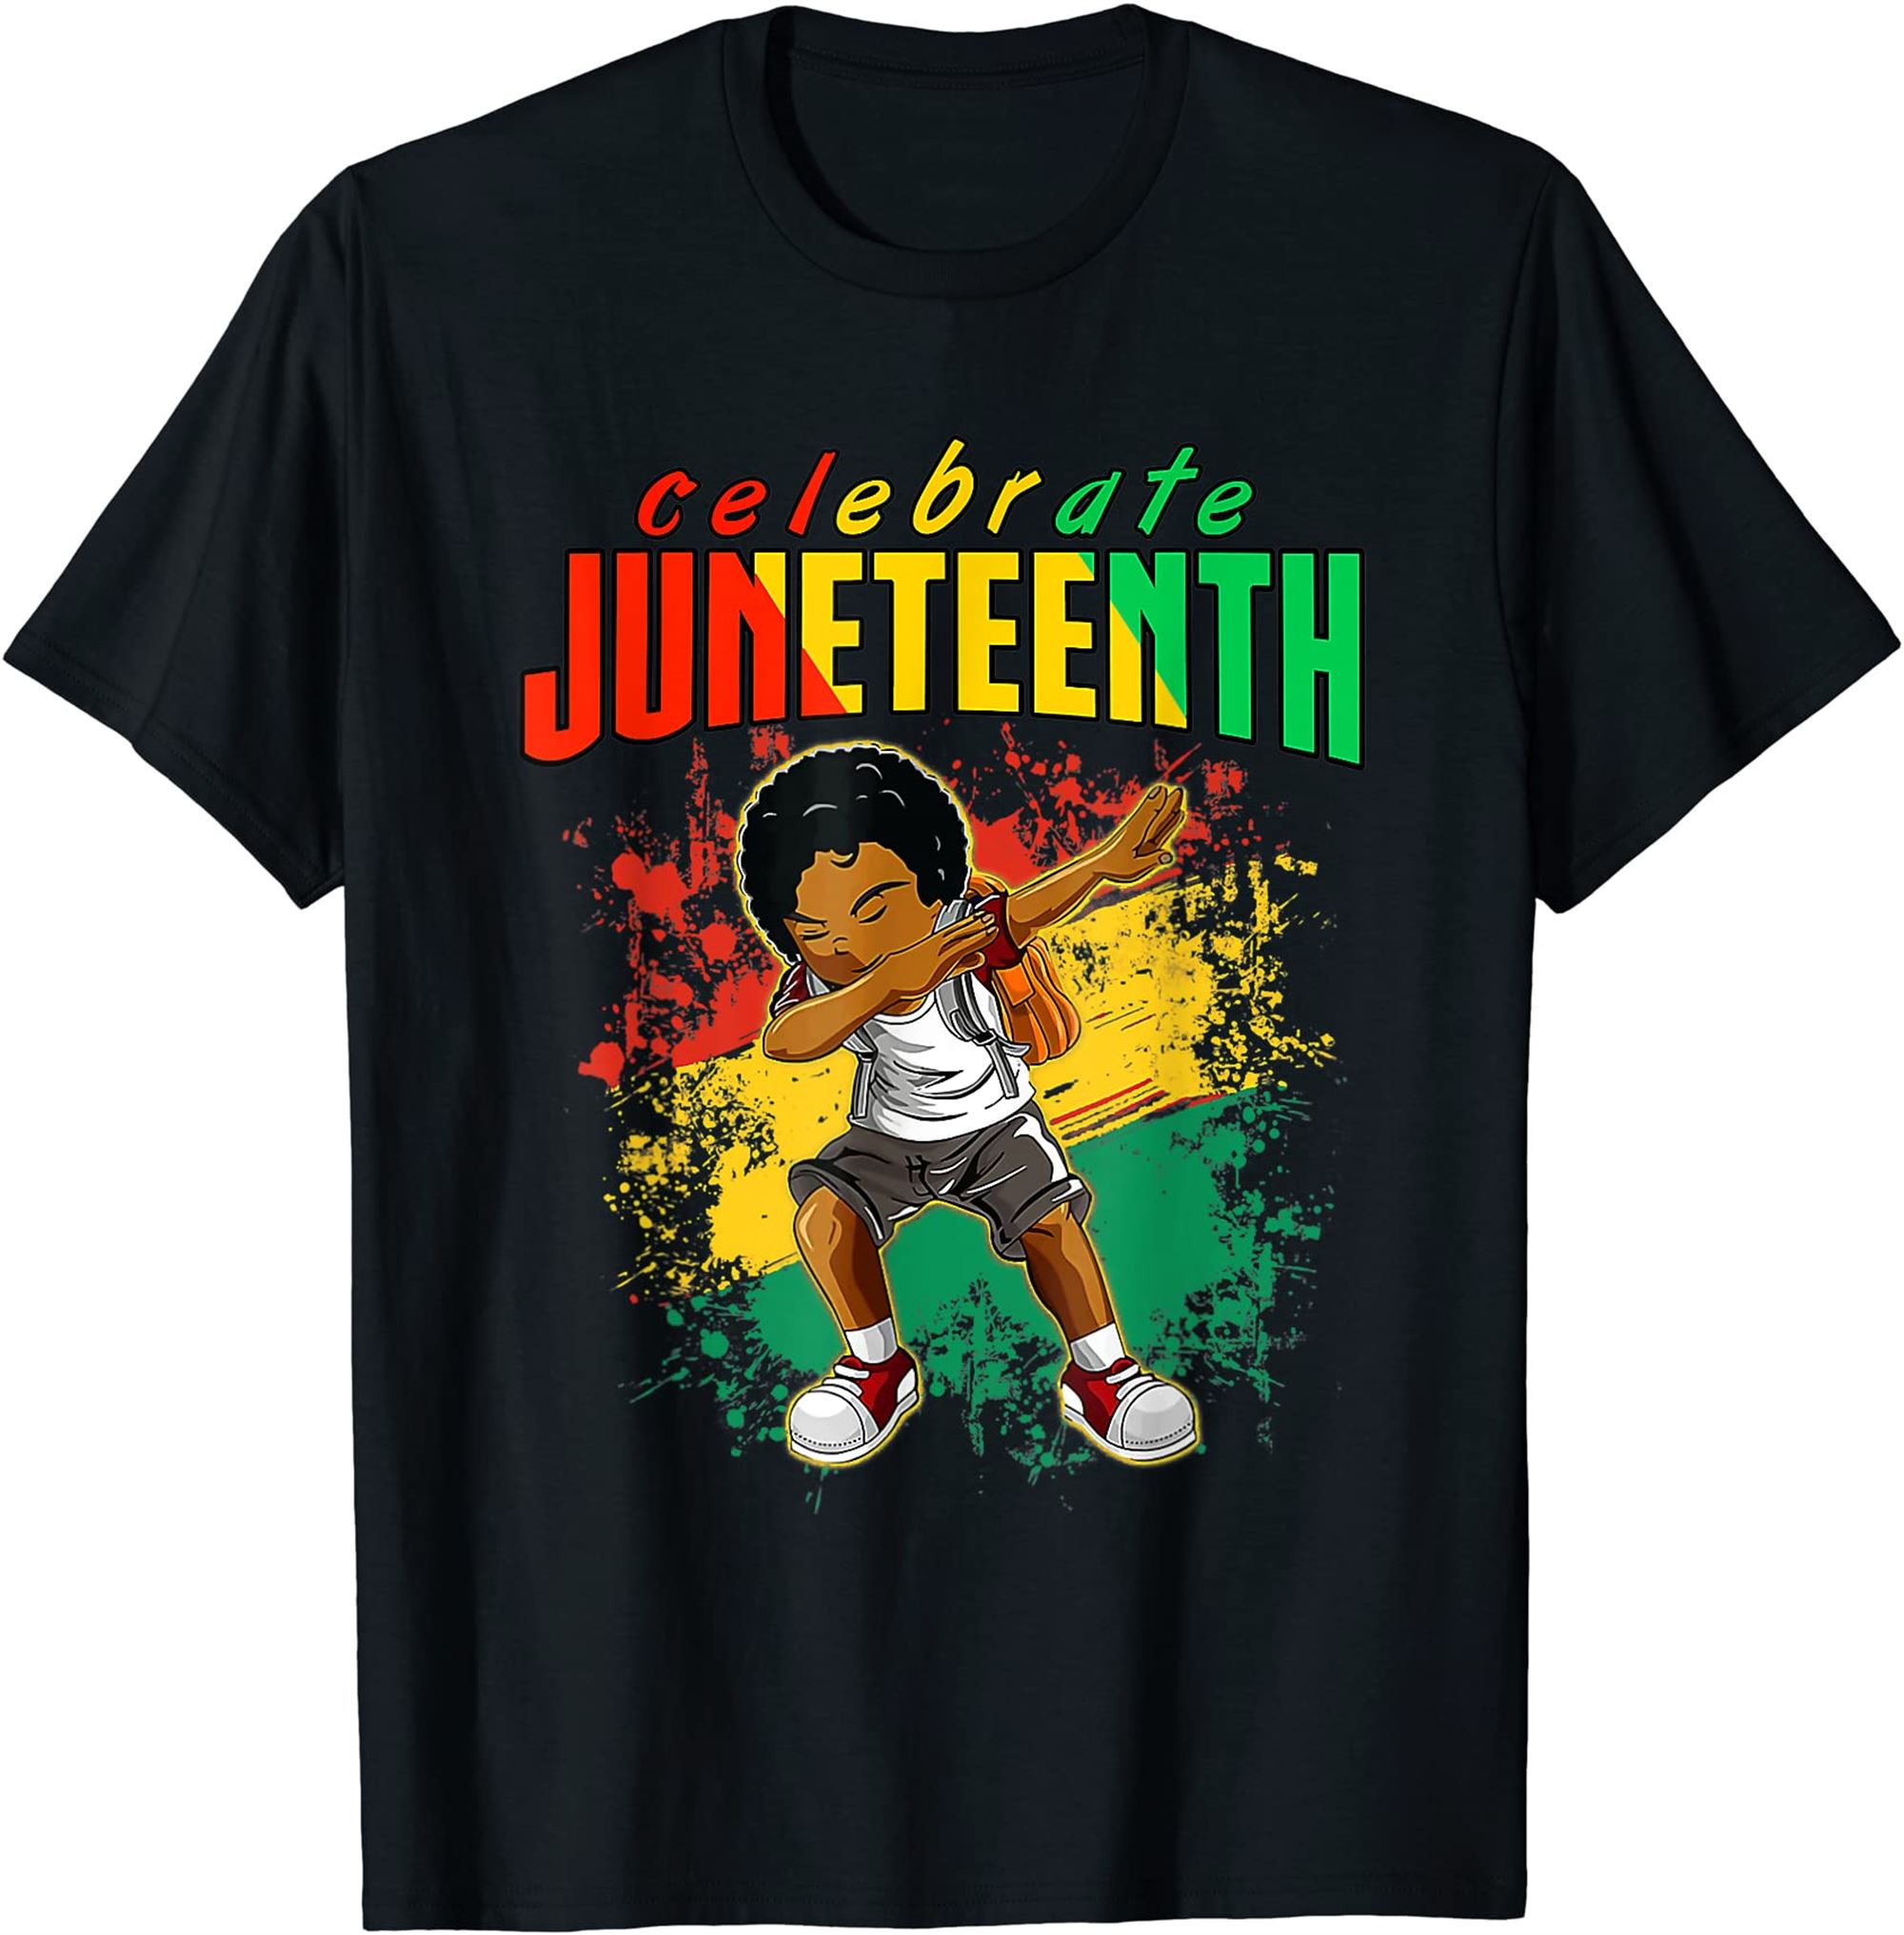 Black Dabbing Boy Kids Juneteenth Celebrate Indepedence Day T-shirt Plus Size Up To 5xl